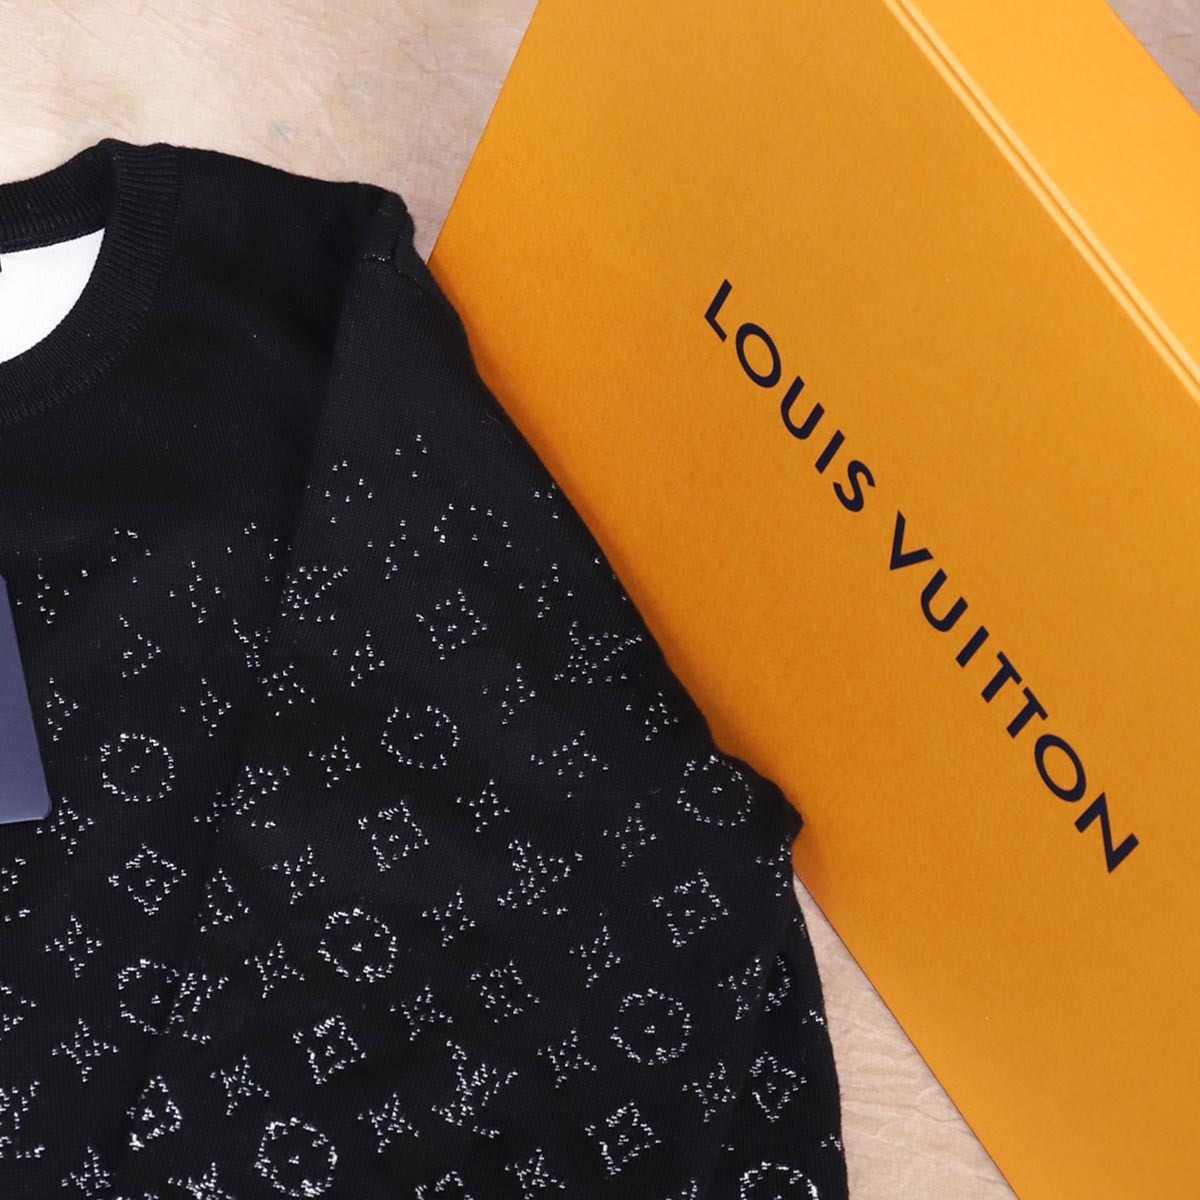  genuine article beautiful goods Louis Vuitton 20AW gradation monogram total pattern knitted sweater men's M black tops long sleeve domestic regular goods LOUIS VUITTON